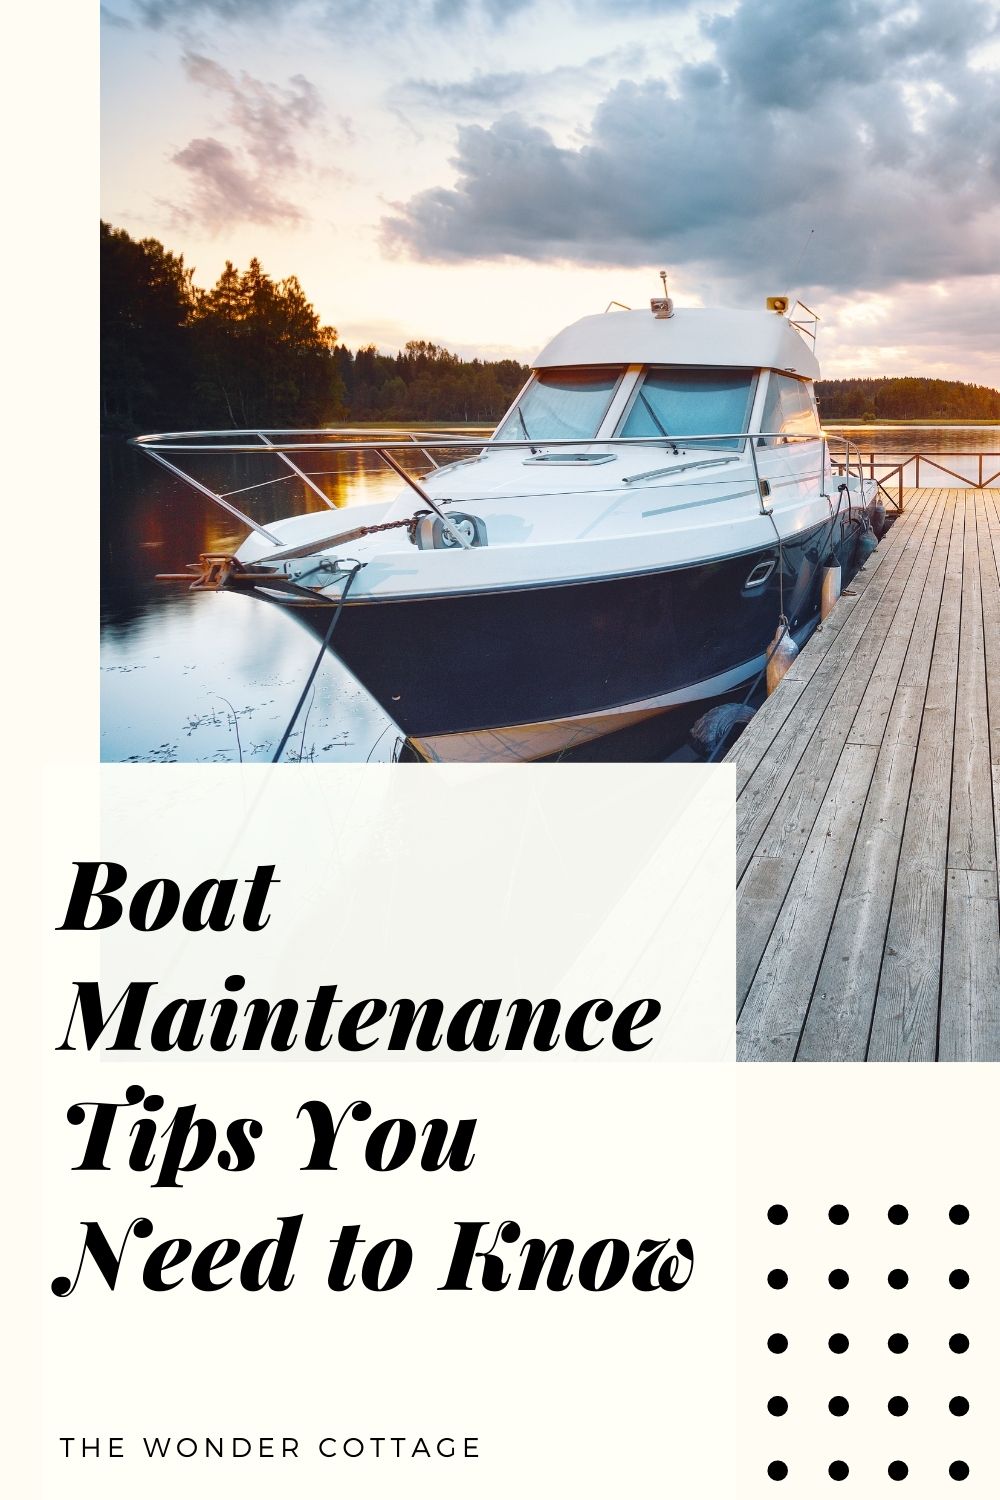 maintenance tips